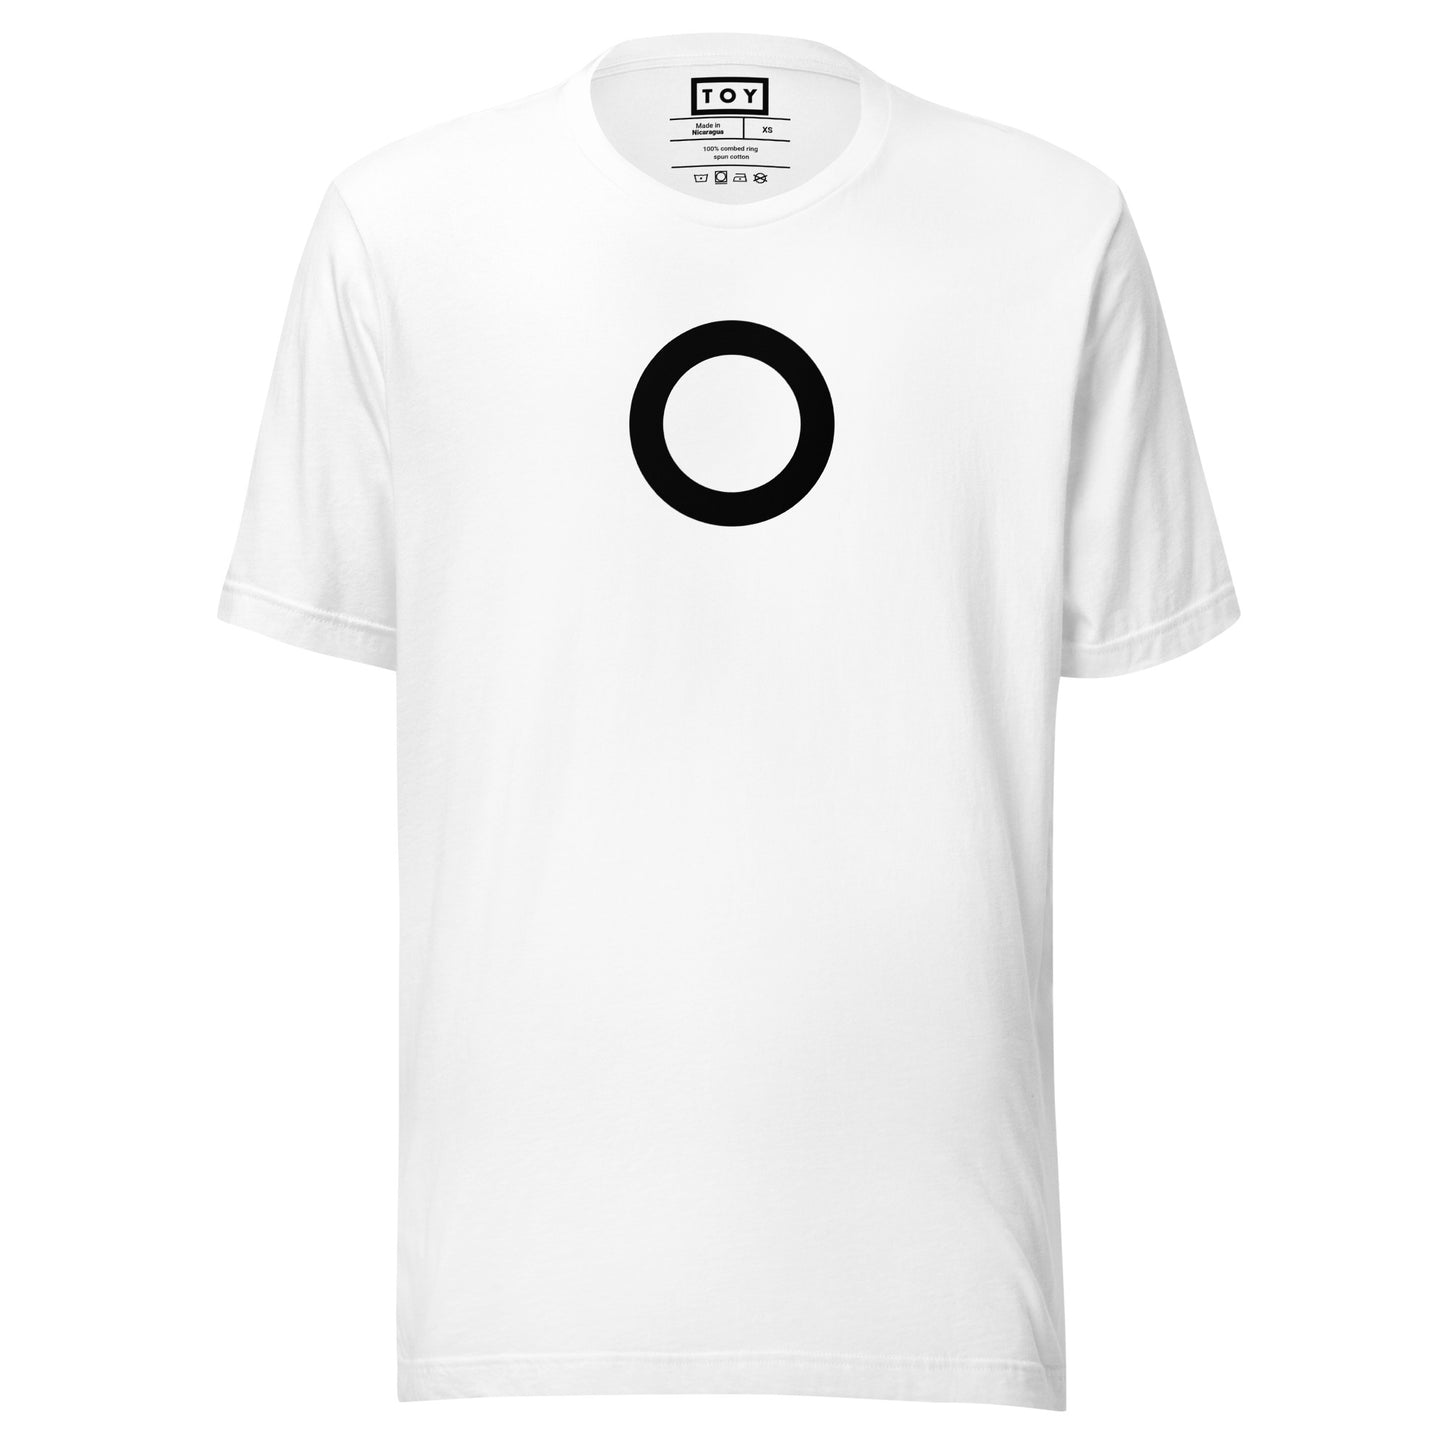 TOY [CIRCLE] Series (Blk) T-shirt